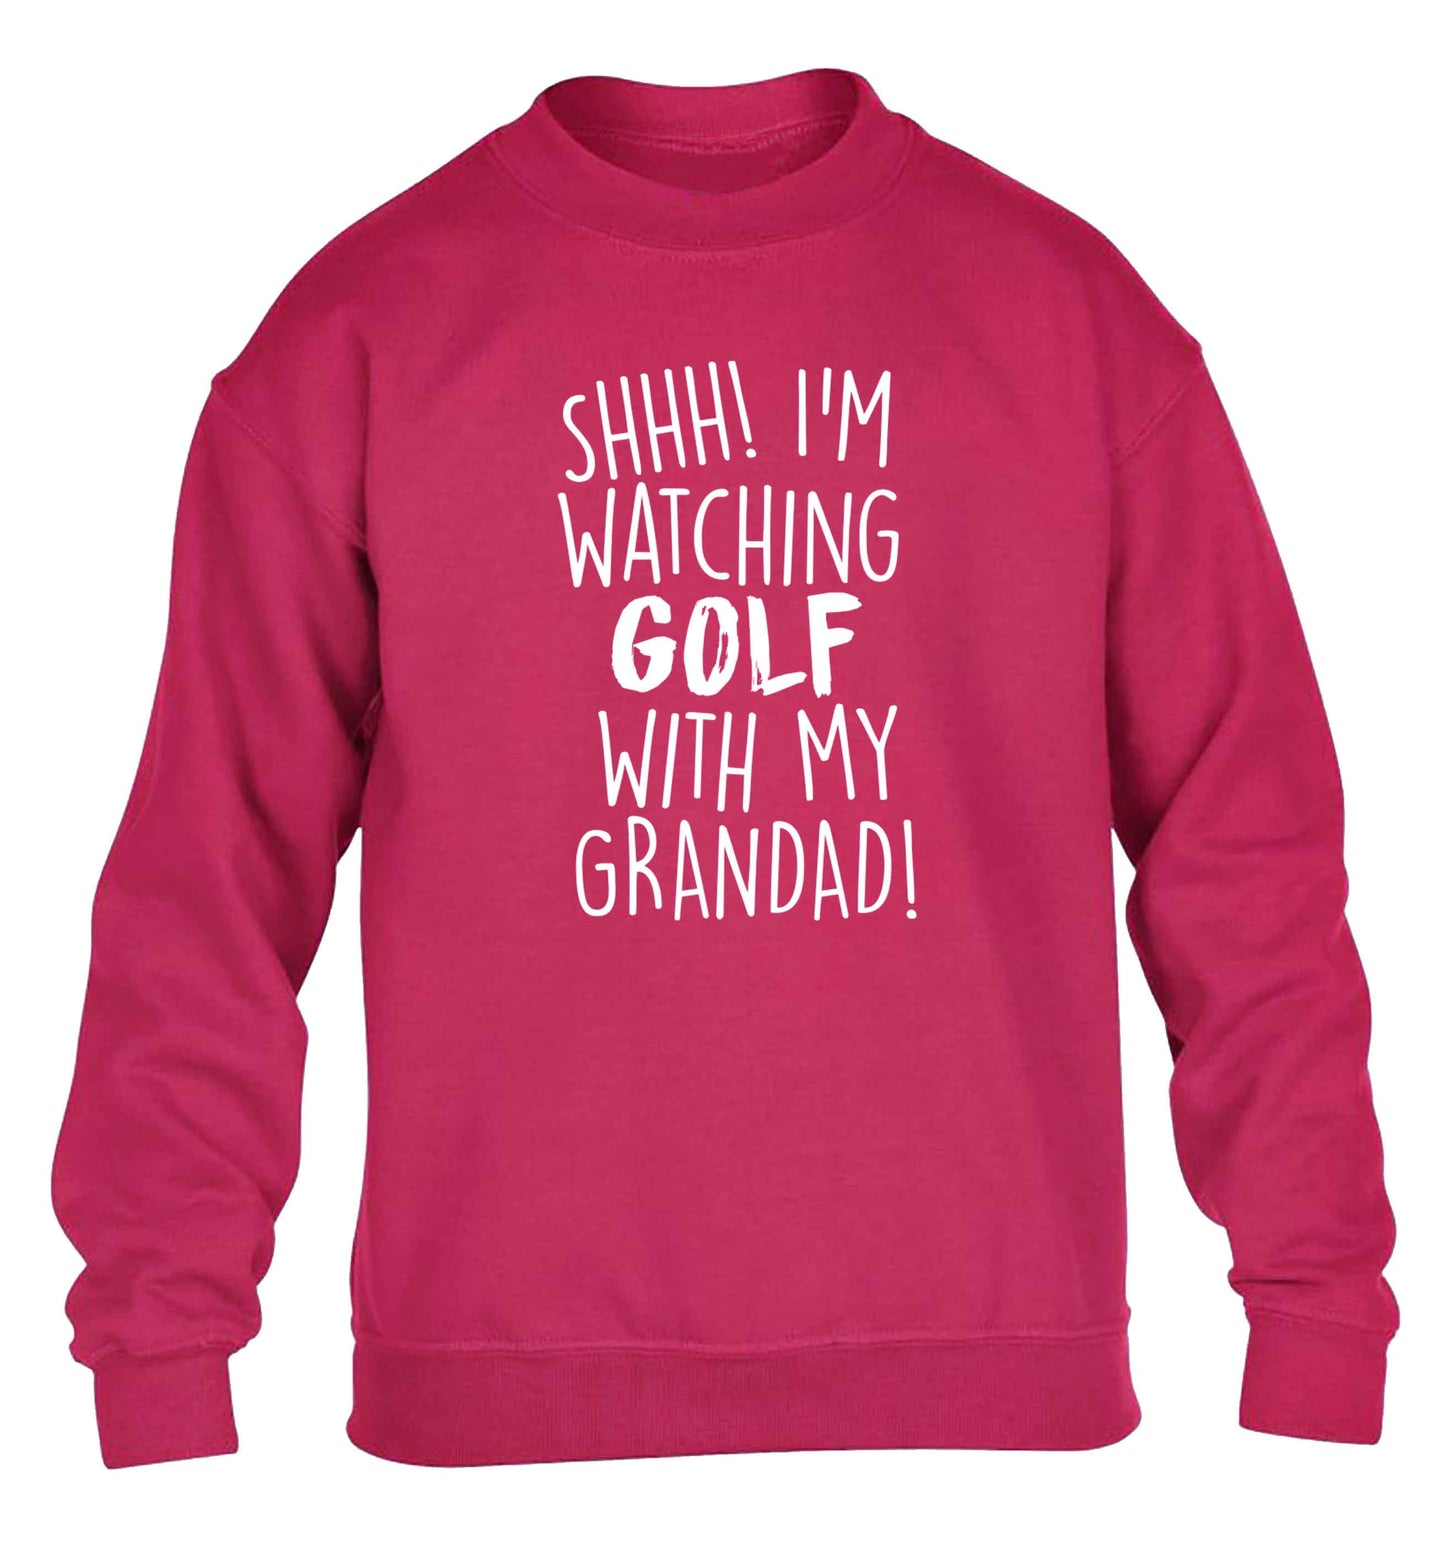 Shh I'm watching golf with my grandad children's pink sweater 12-13 Years